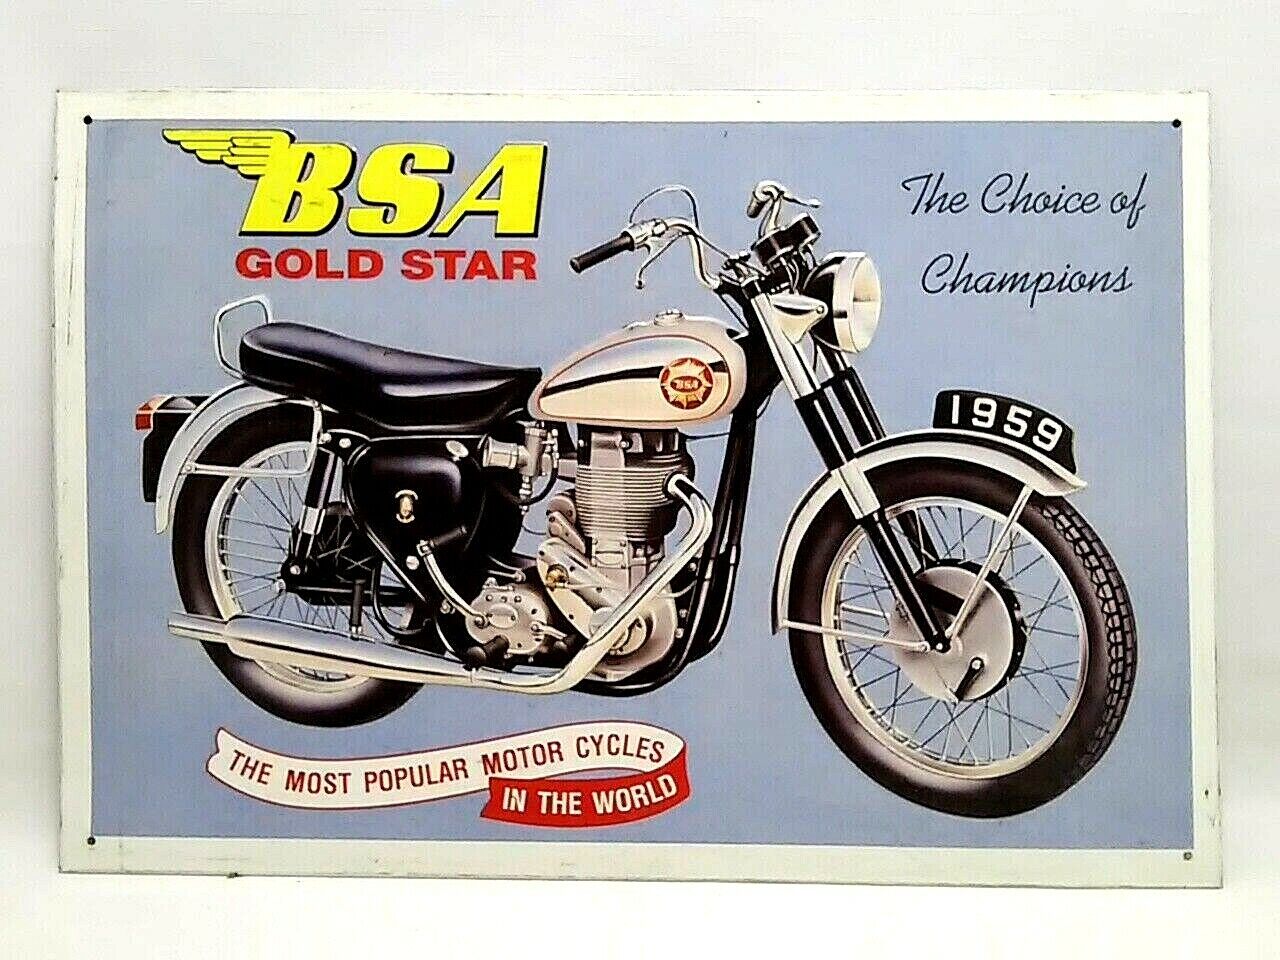 16x11 inch VINTAGE made in UK metal BSA motorcycle SIGN